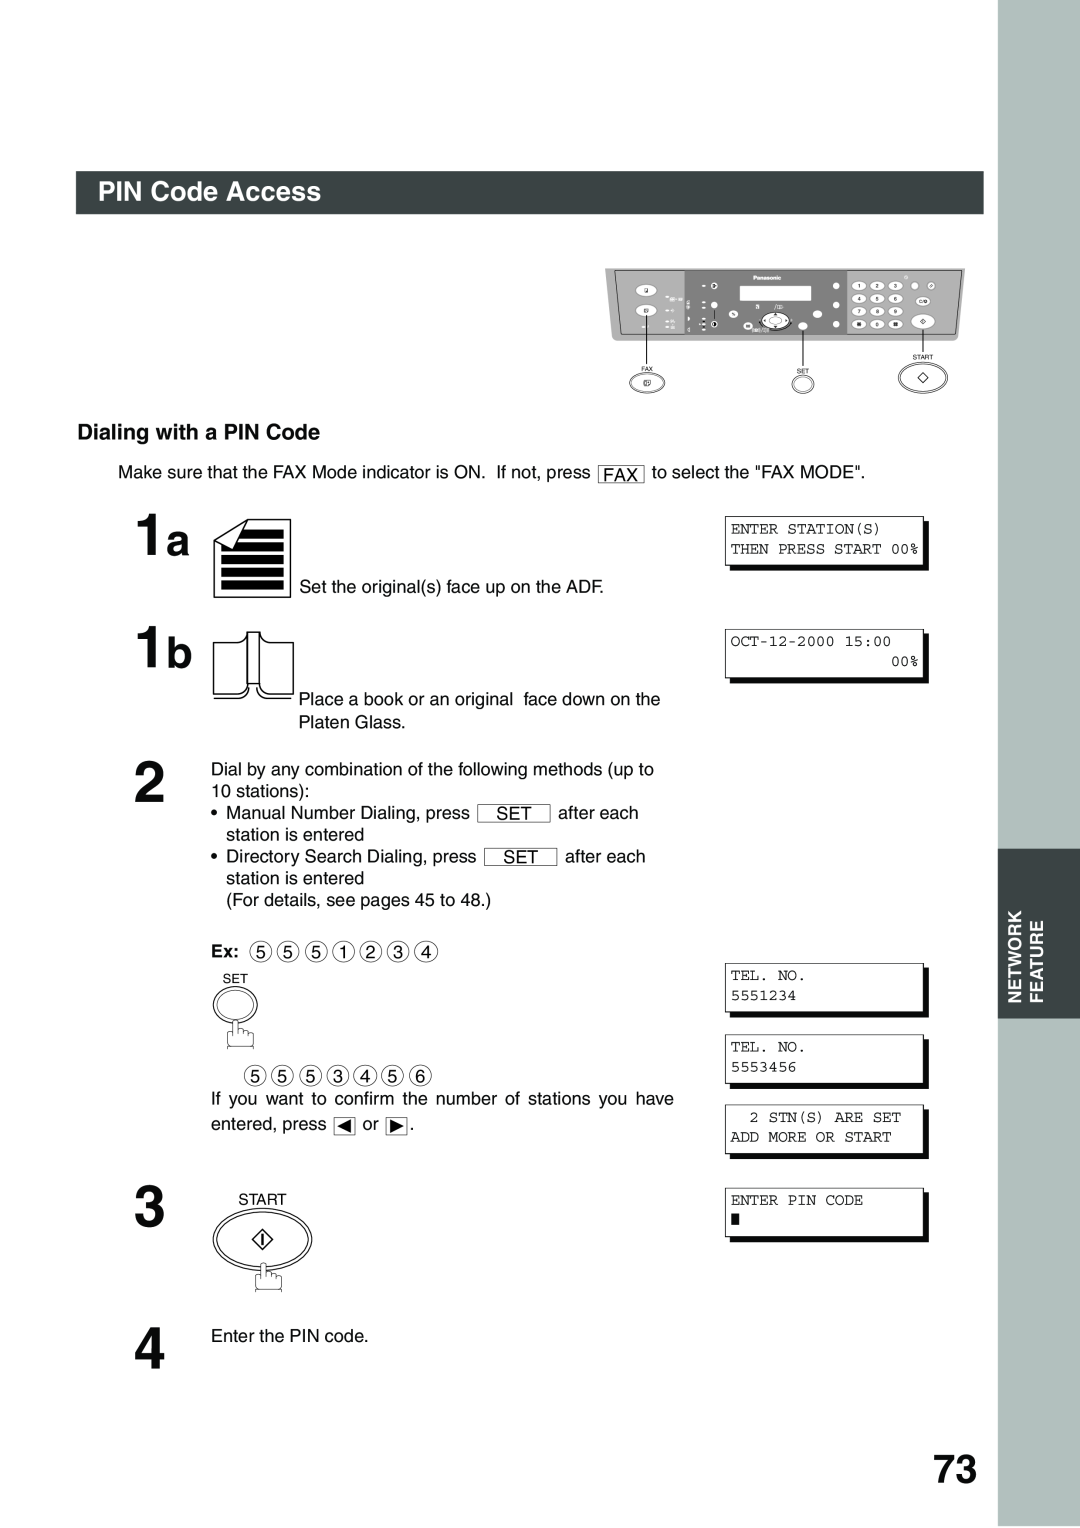 Panasonic DP-135FP appendix Dialing with a PIN Code, PIN Code Access 